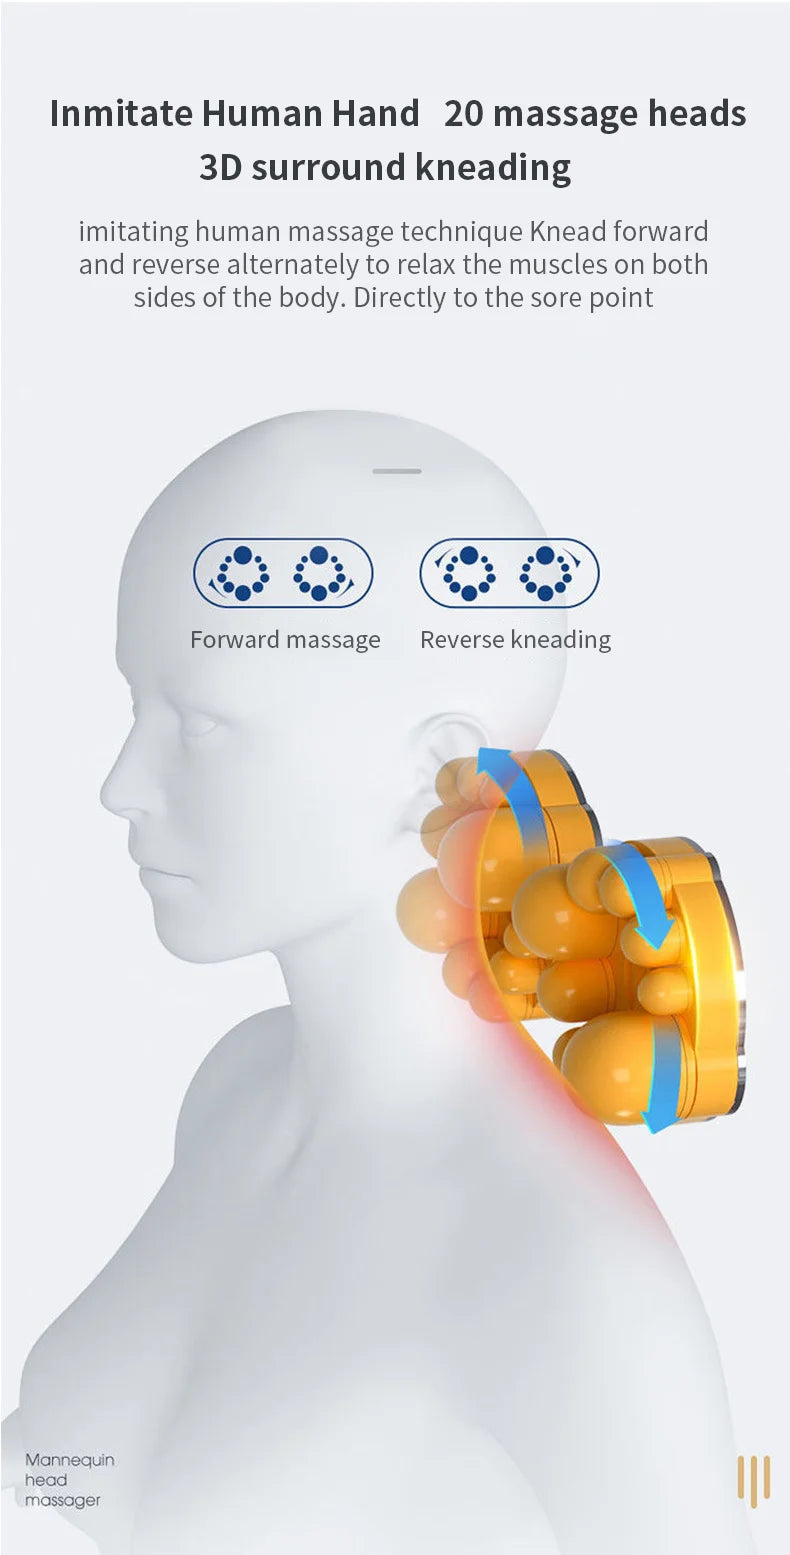 InzysJointRelief - Shiatsu Neck & Lower Back Massager Cushion With Vibration